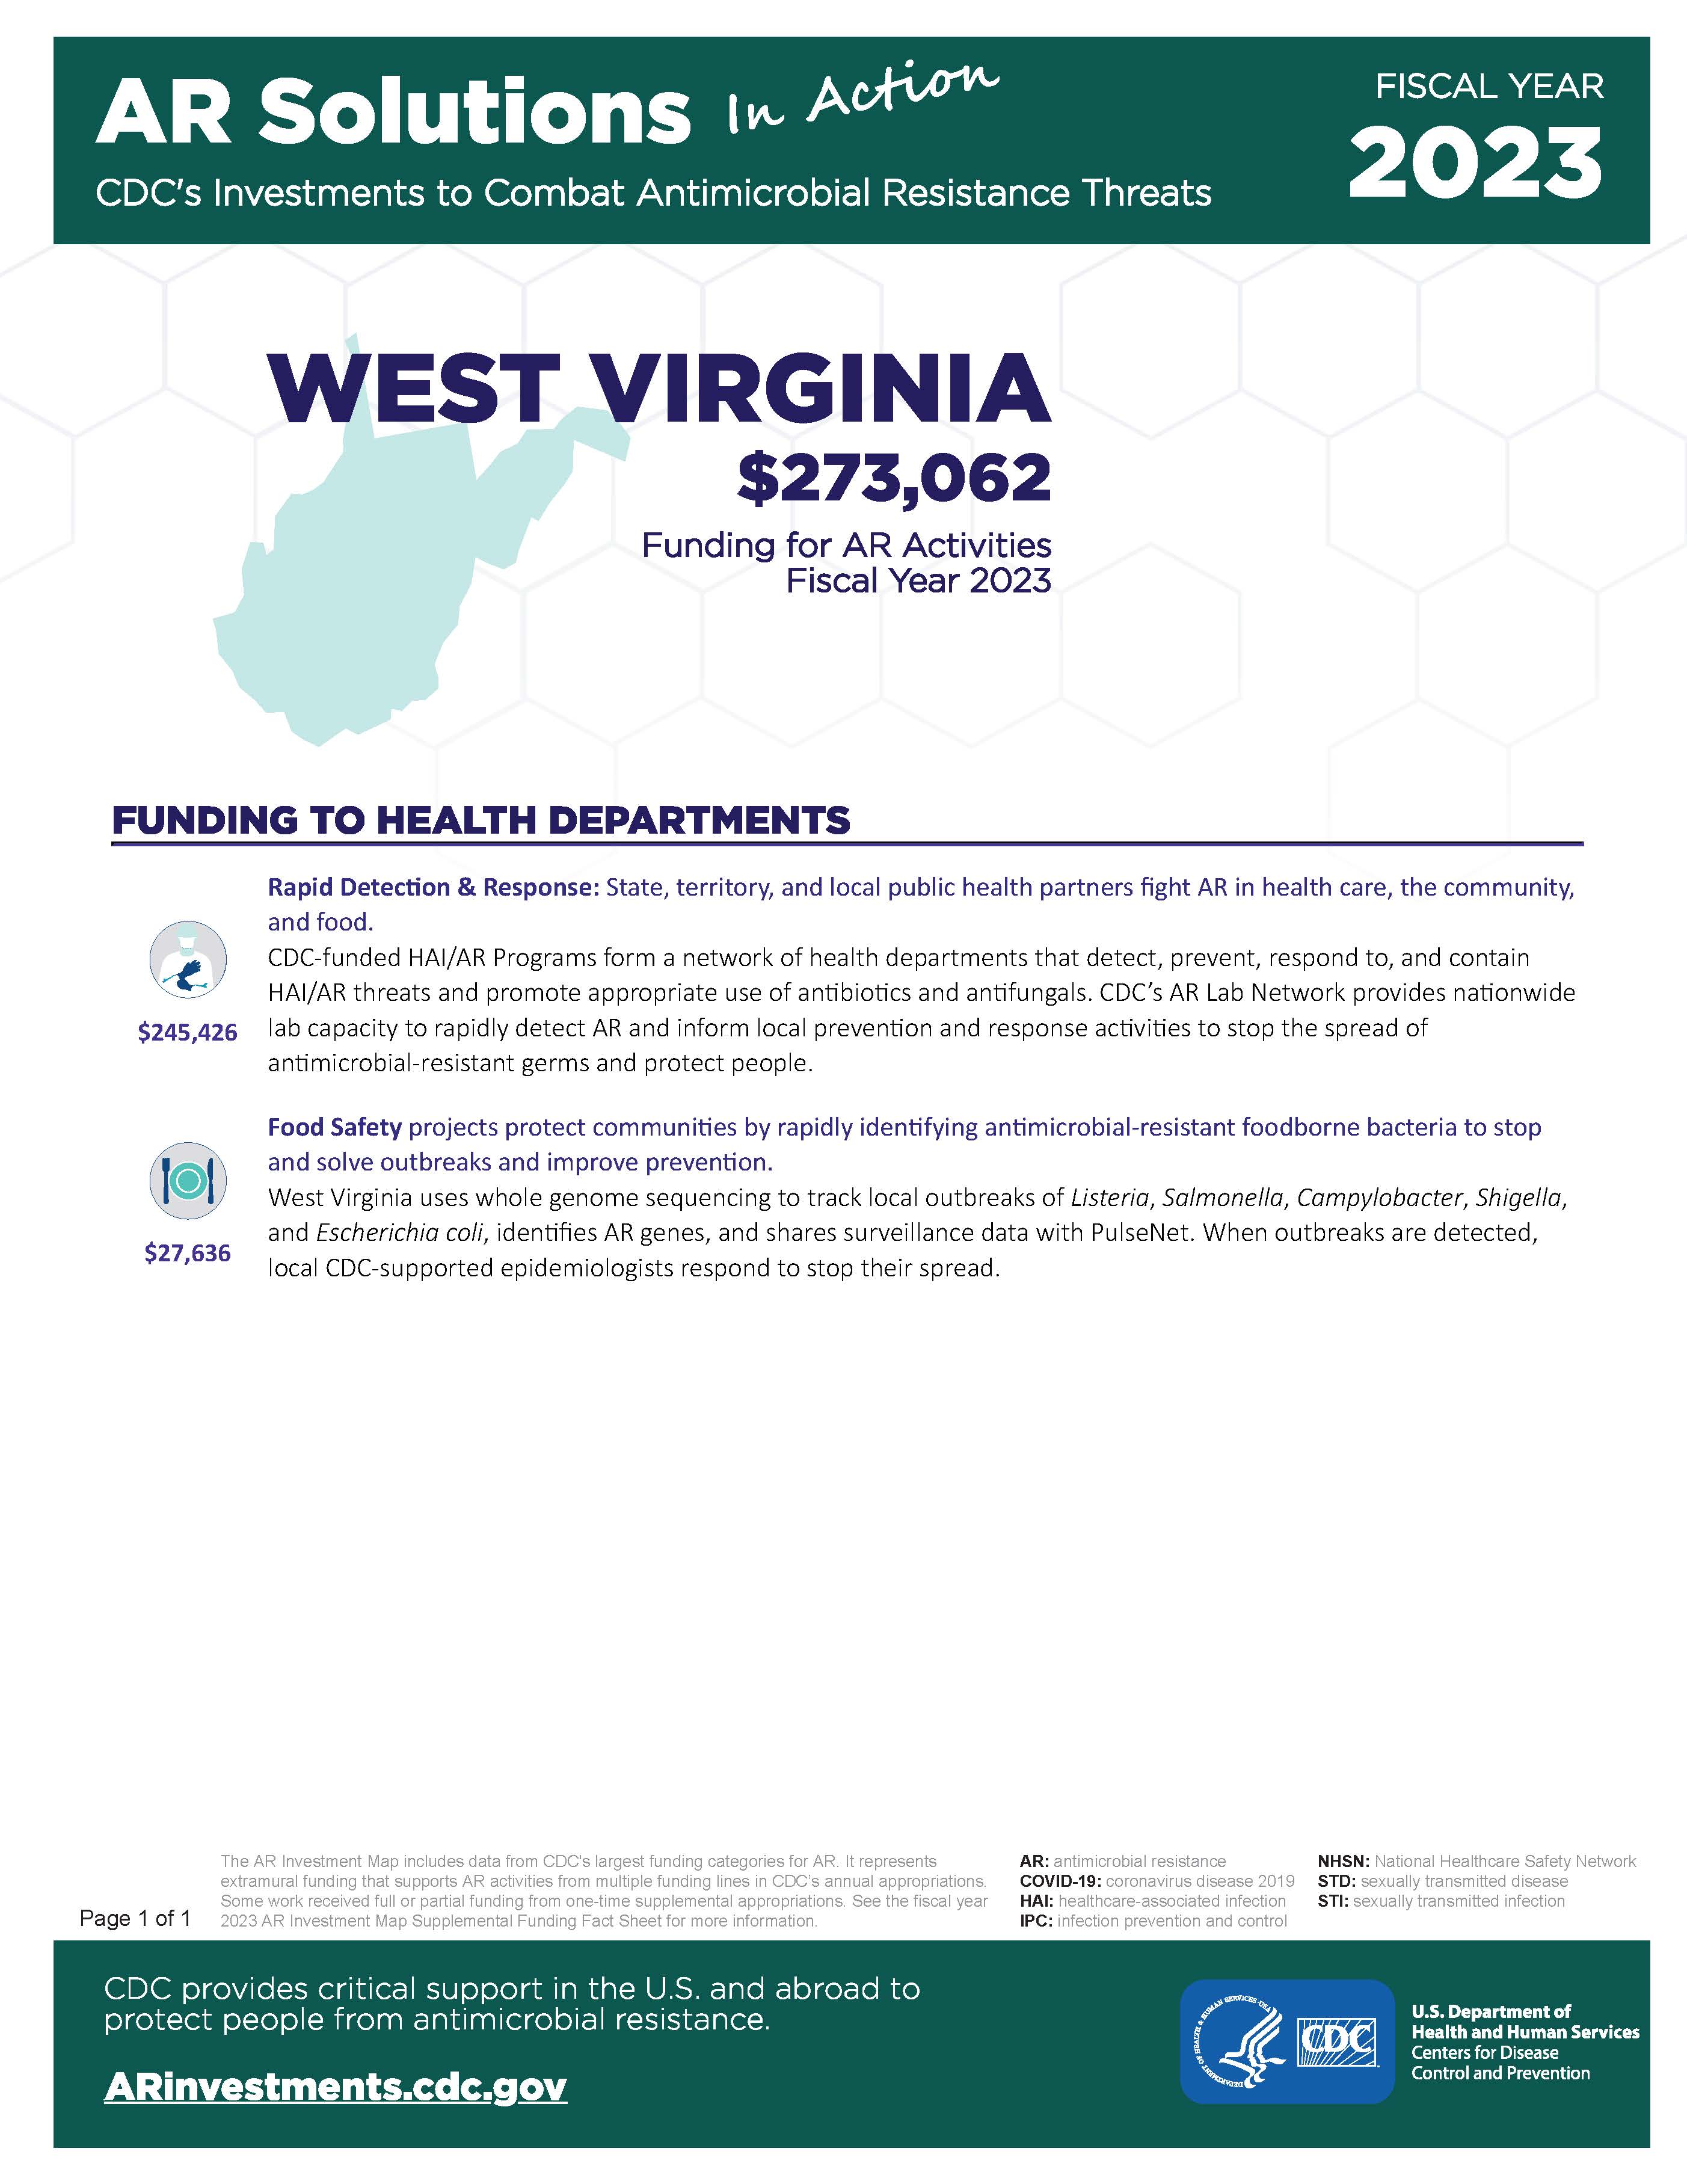 View Factsheet for West Virginia